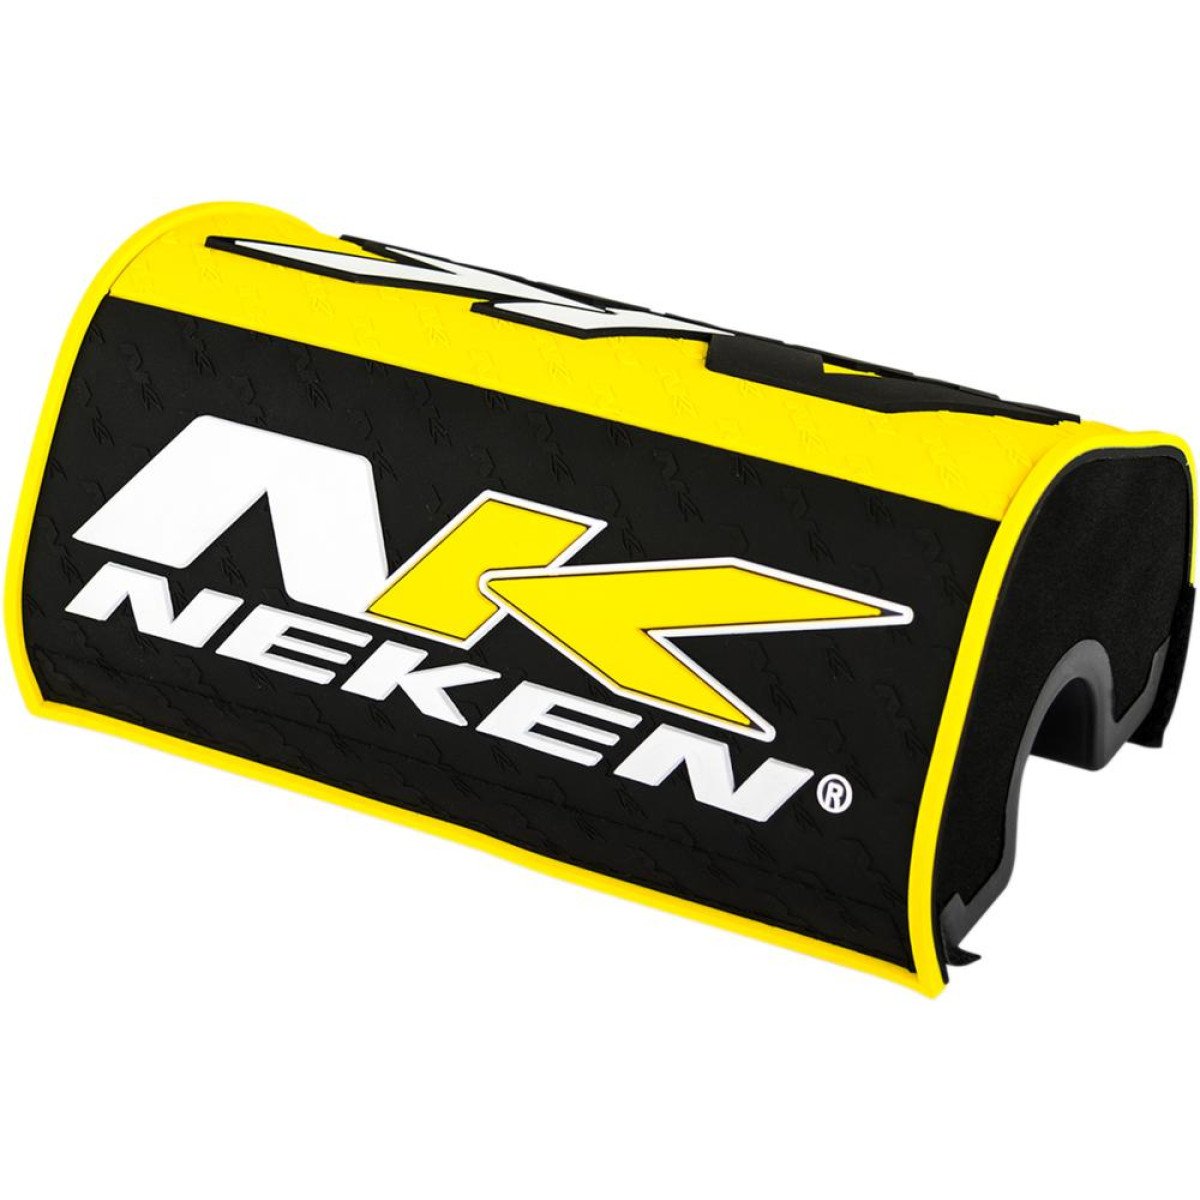 Neken Handlebar Pad  Yellow/Black, For Neken Handlebars